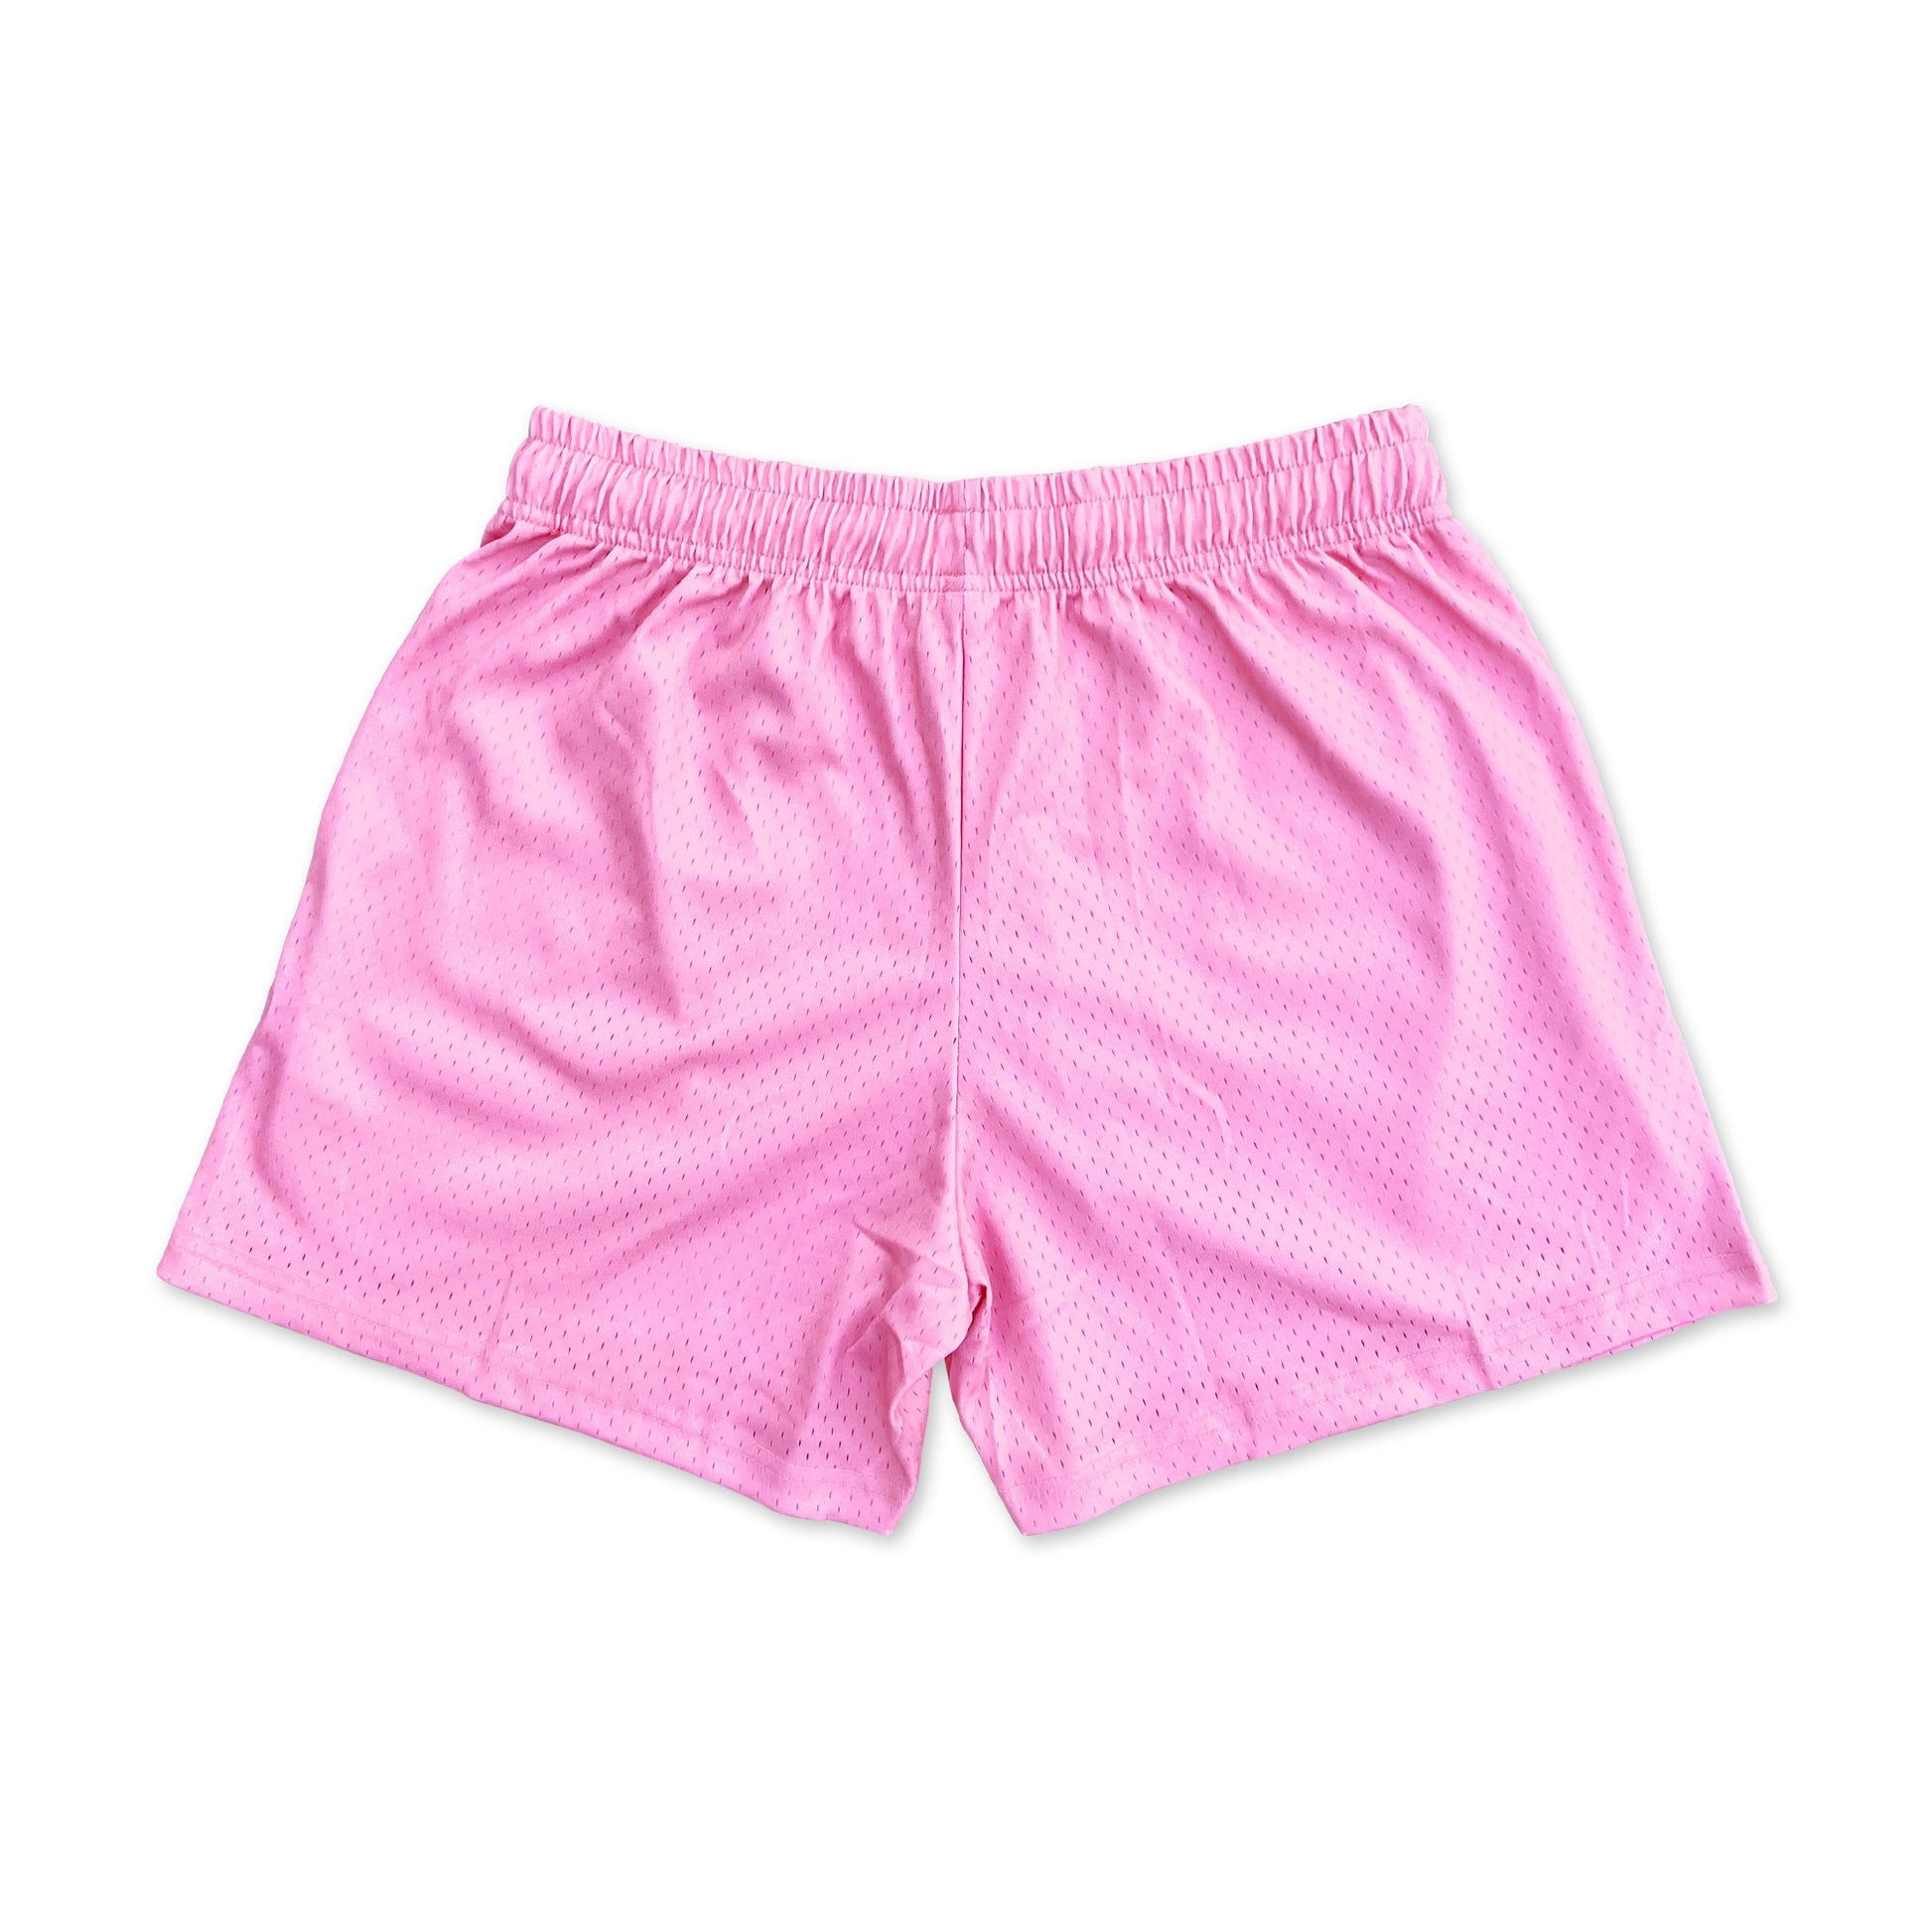 Pink - Premium Mesh JJ Shorts - 5 Inch Inseam - Vintage Gym Basketball –  JJshorts